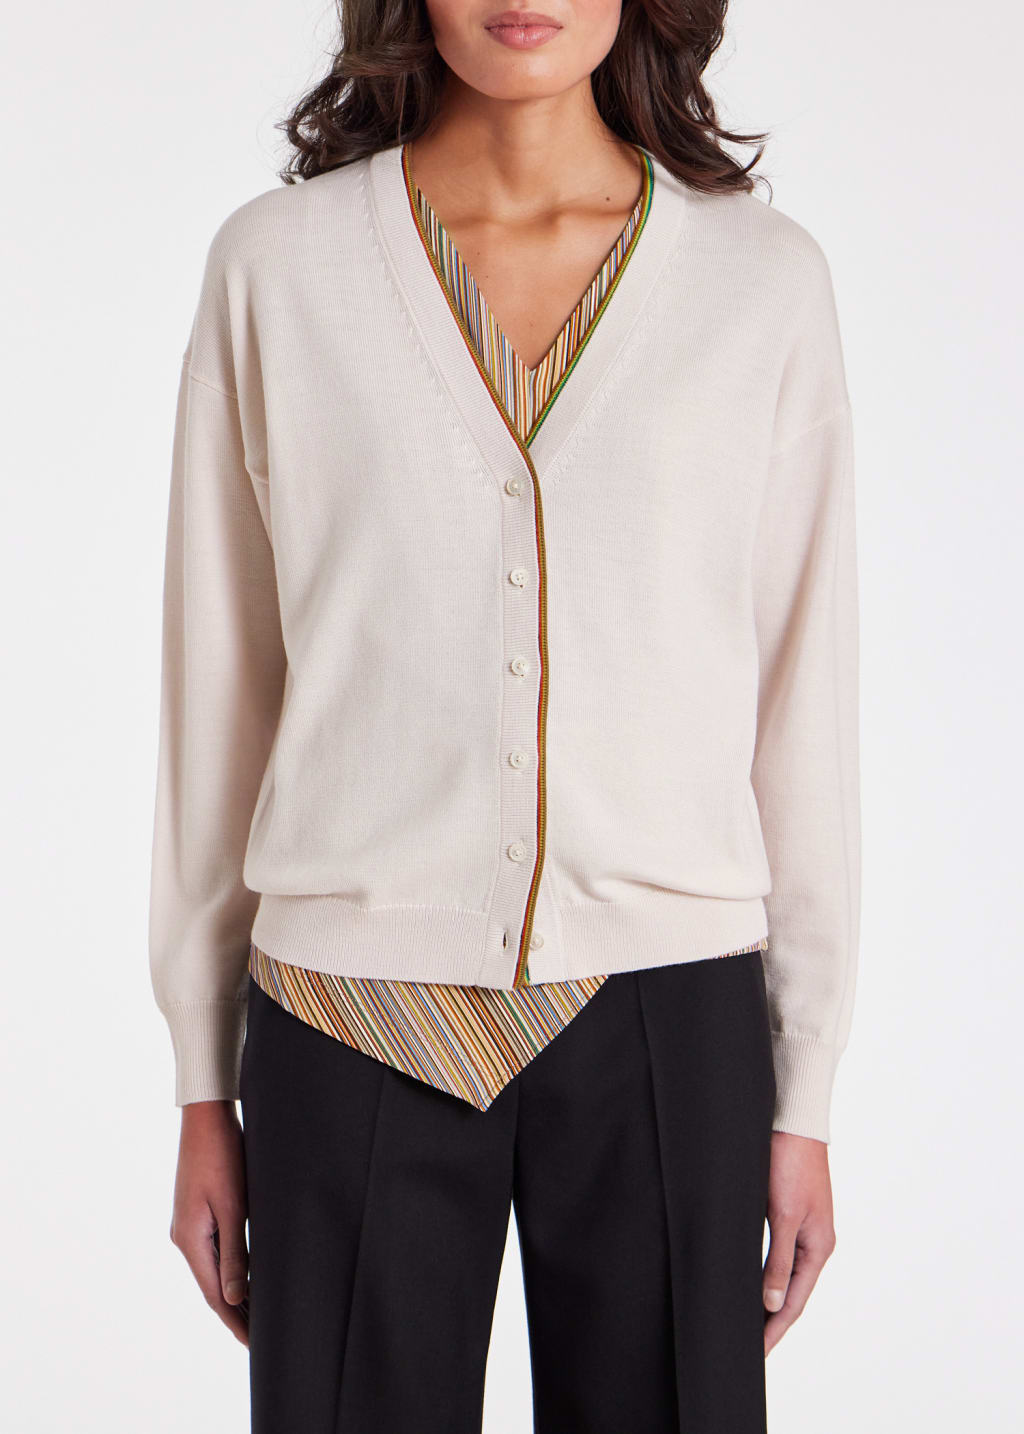 Model View - Women's Ivory Merino Wool 'Signature Stripe' Cardigan Paul Smith